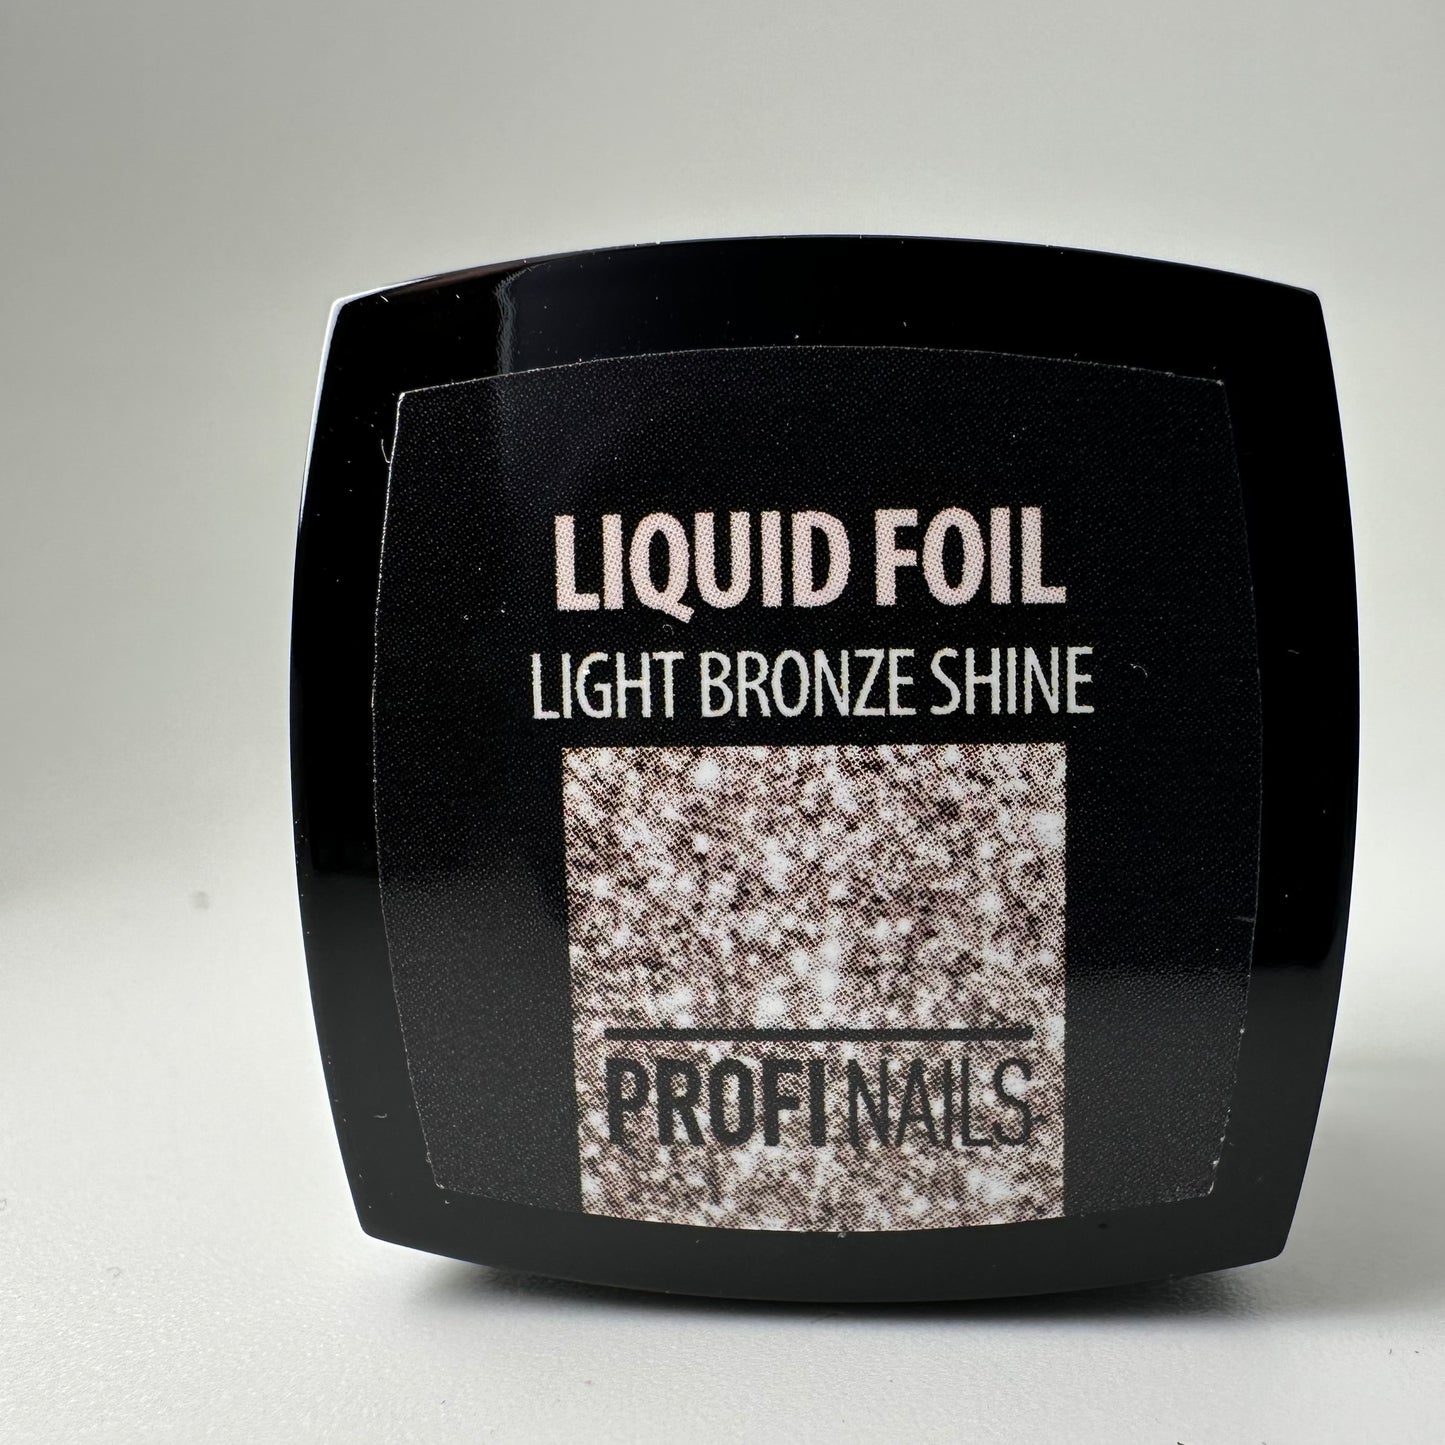 Liquid Foil Light Bronze Shine